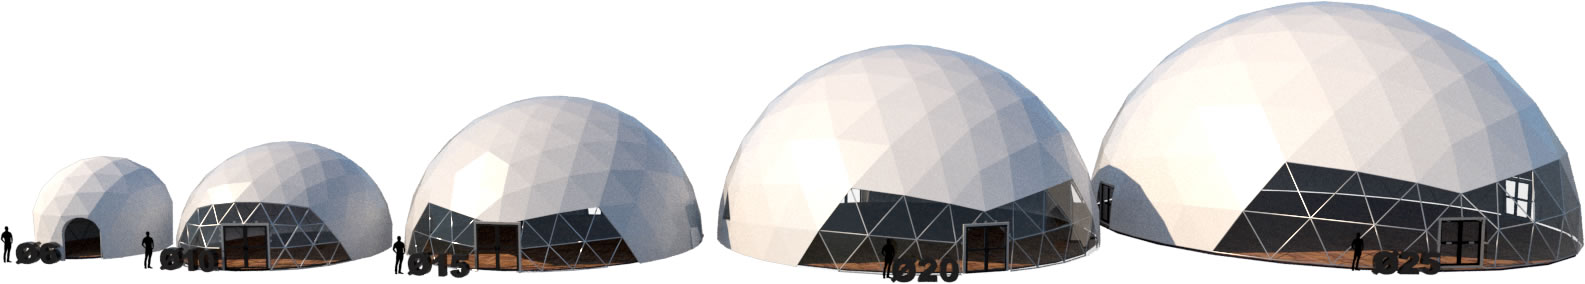 domos-geodesicos-2021